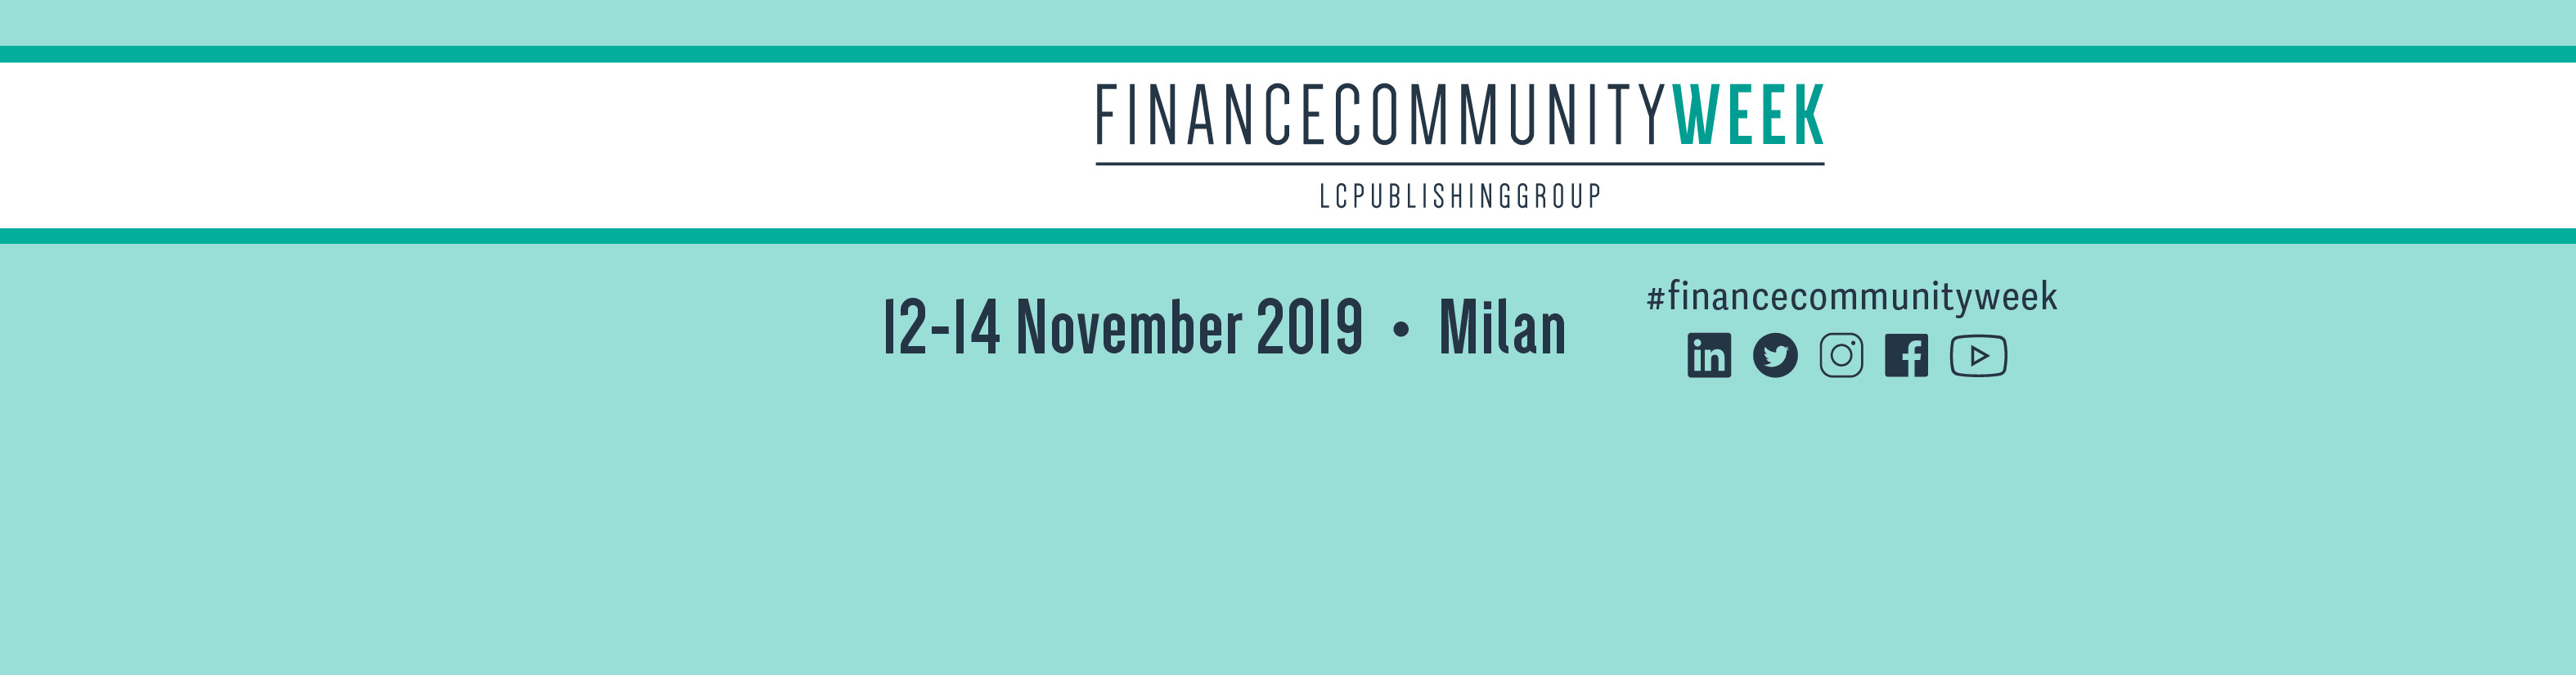 Financecommunity Week, 12-14 November 2019, Milan